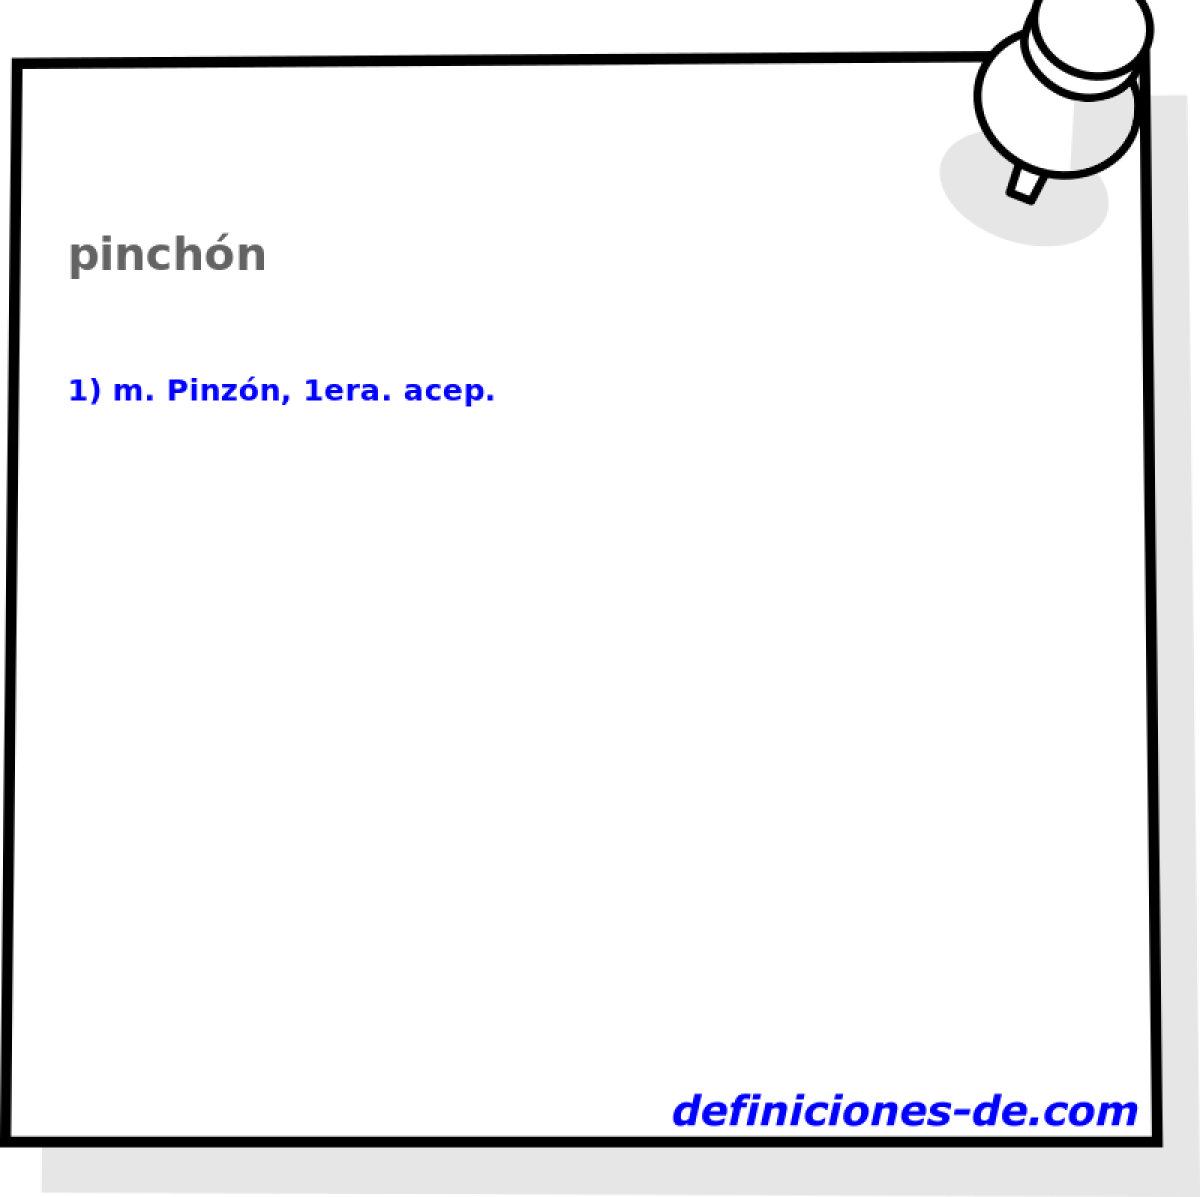 pinchn 